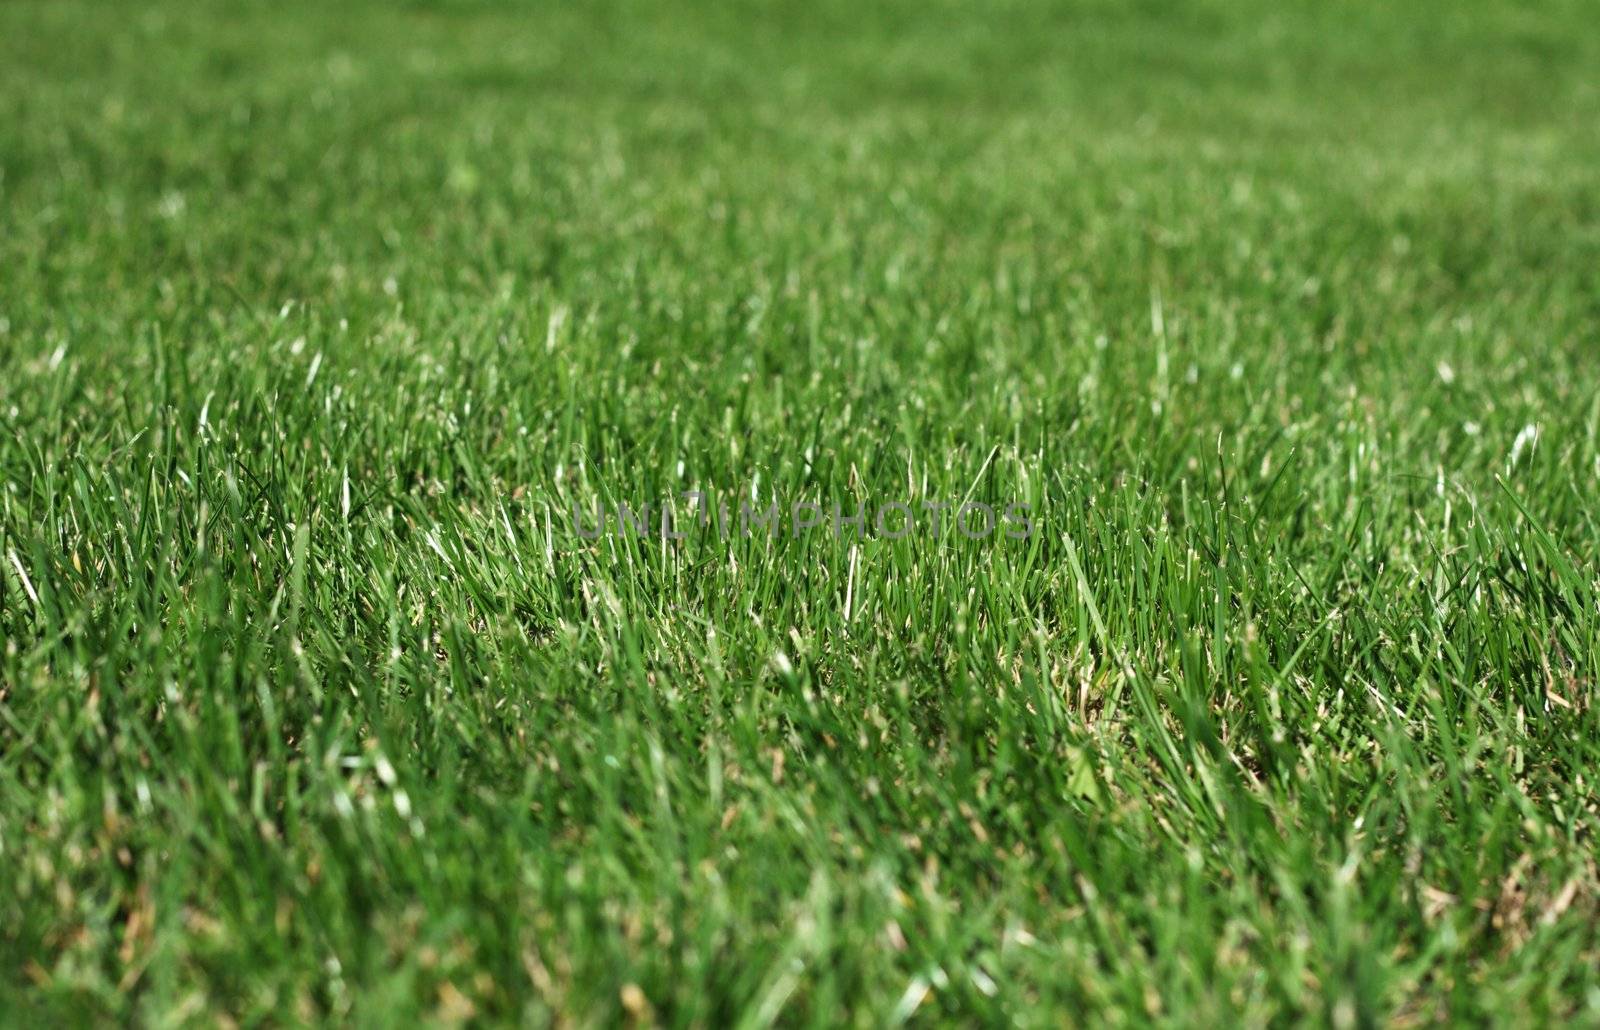 Close-up photo of fresh green grass, shallow depth of field